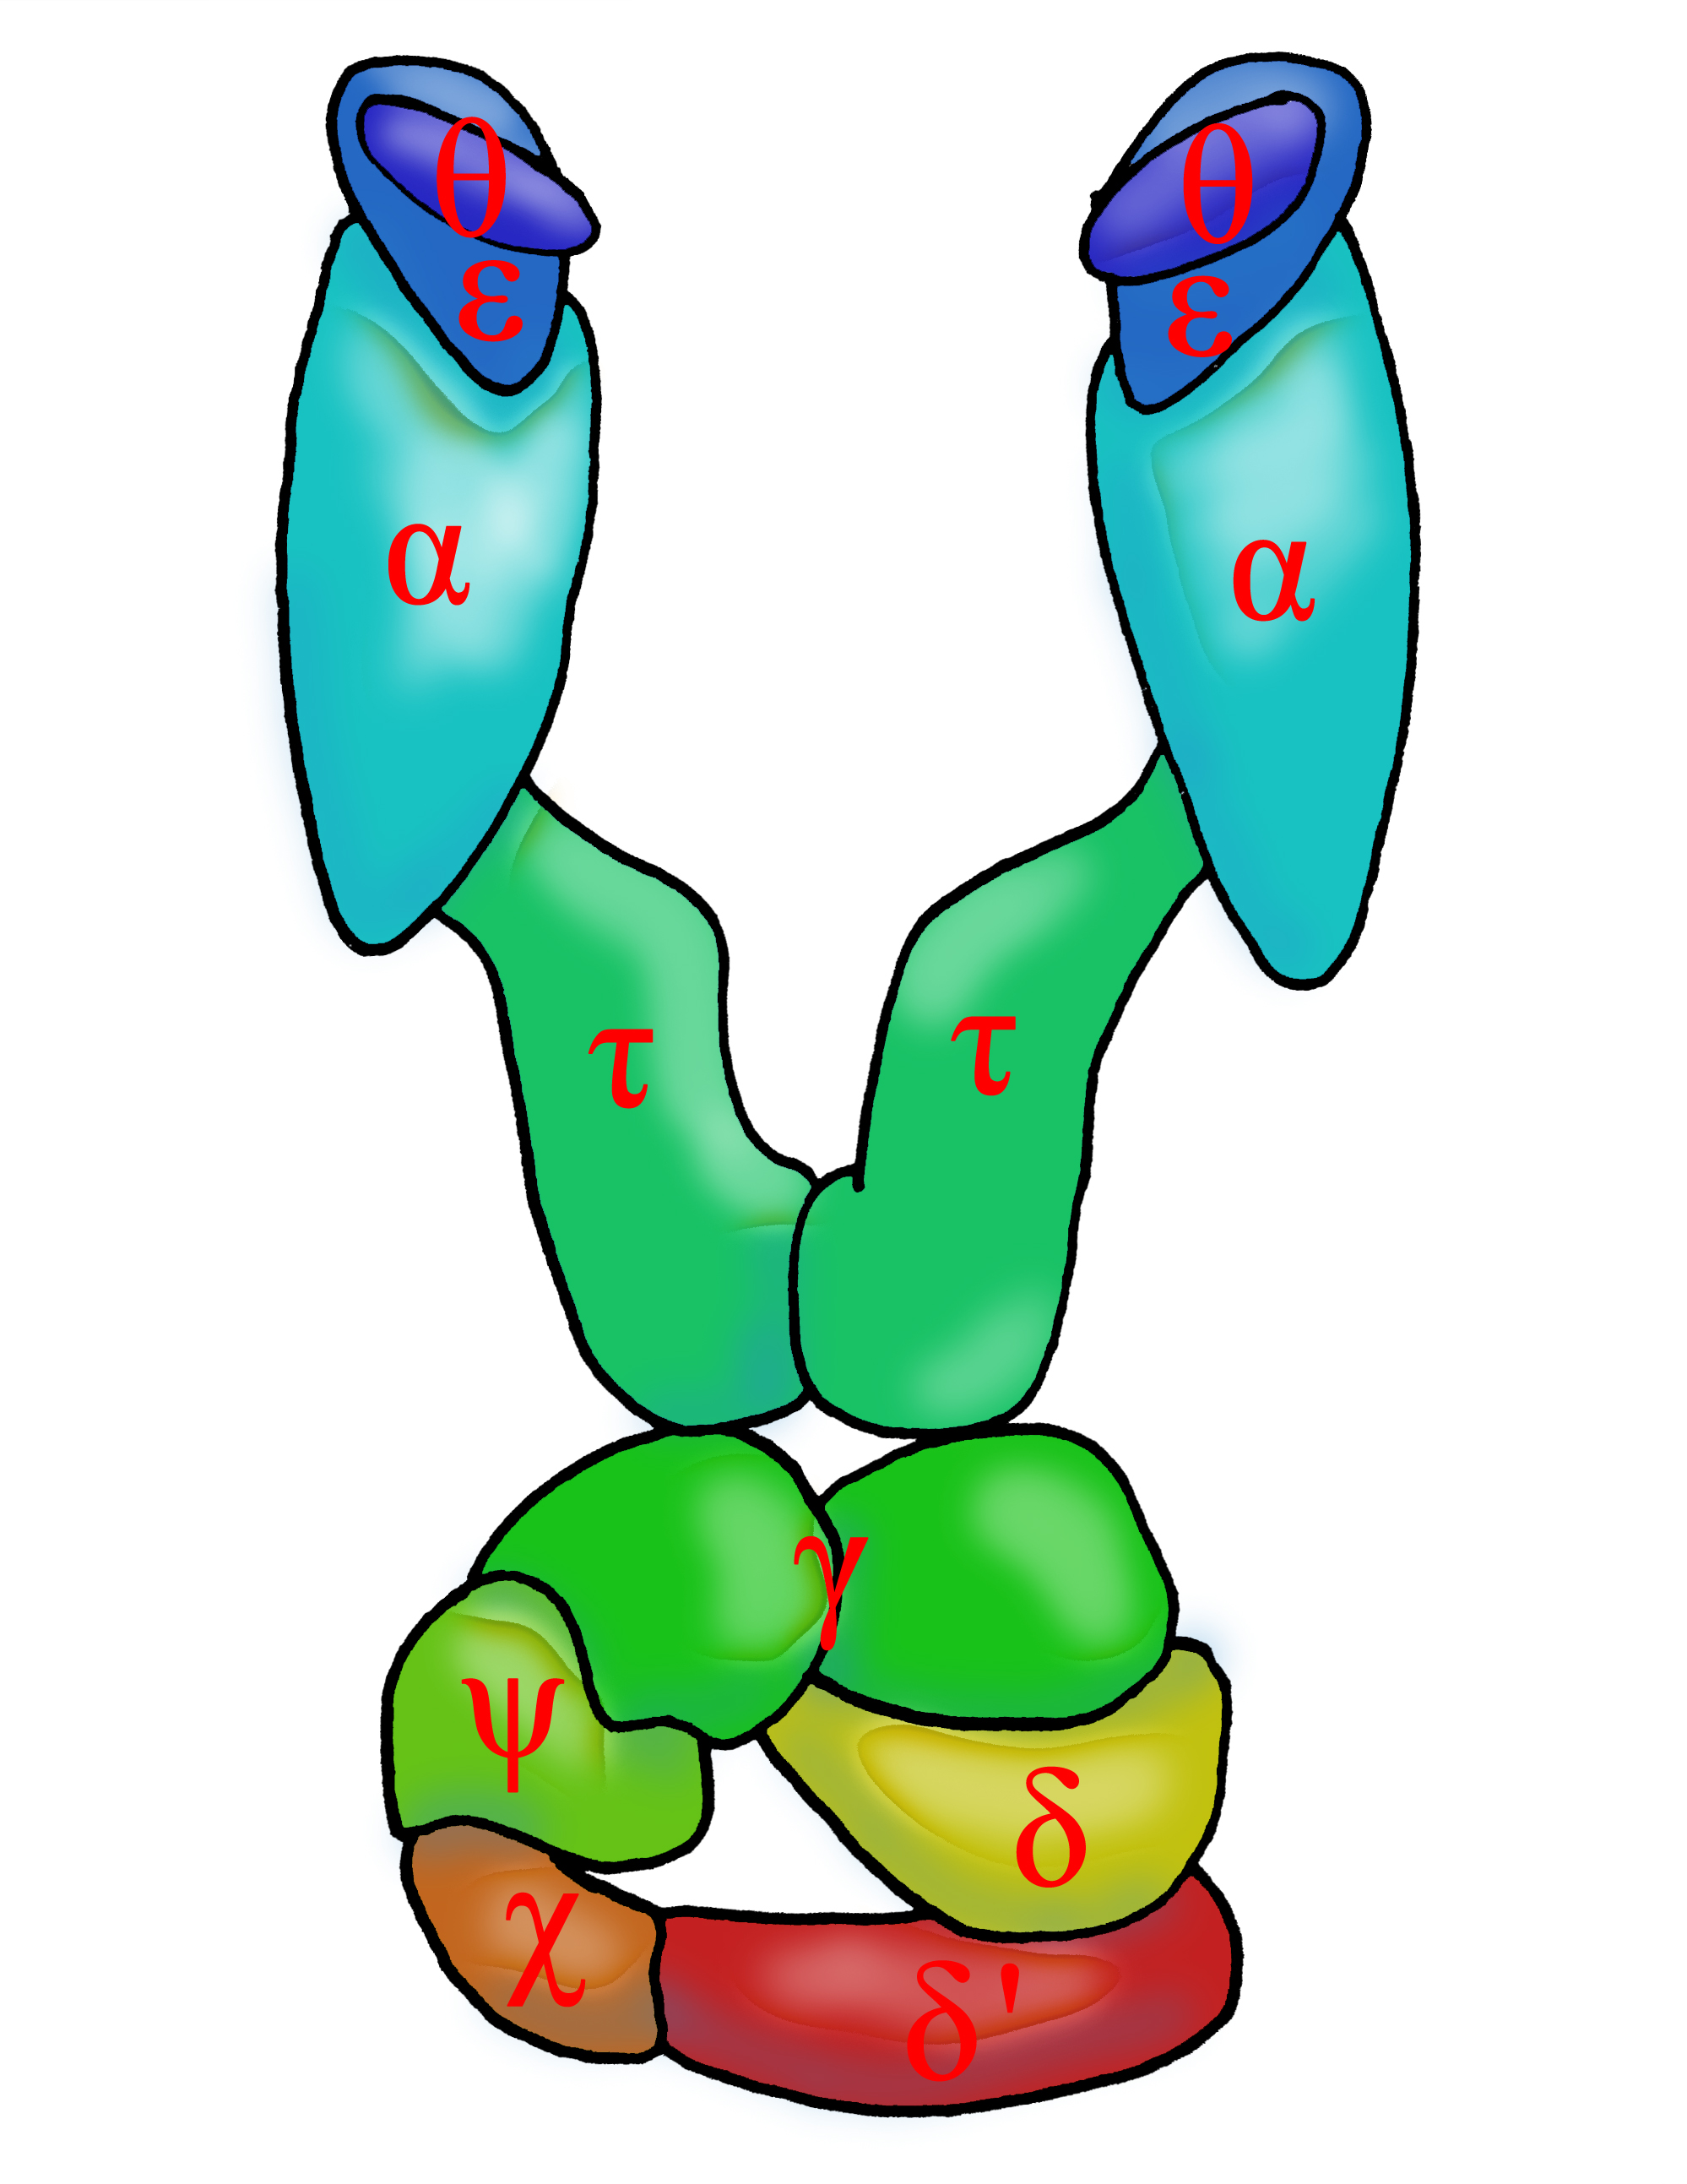 DNA polymerase III holoenzyme - Wikipedia